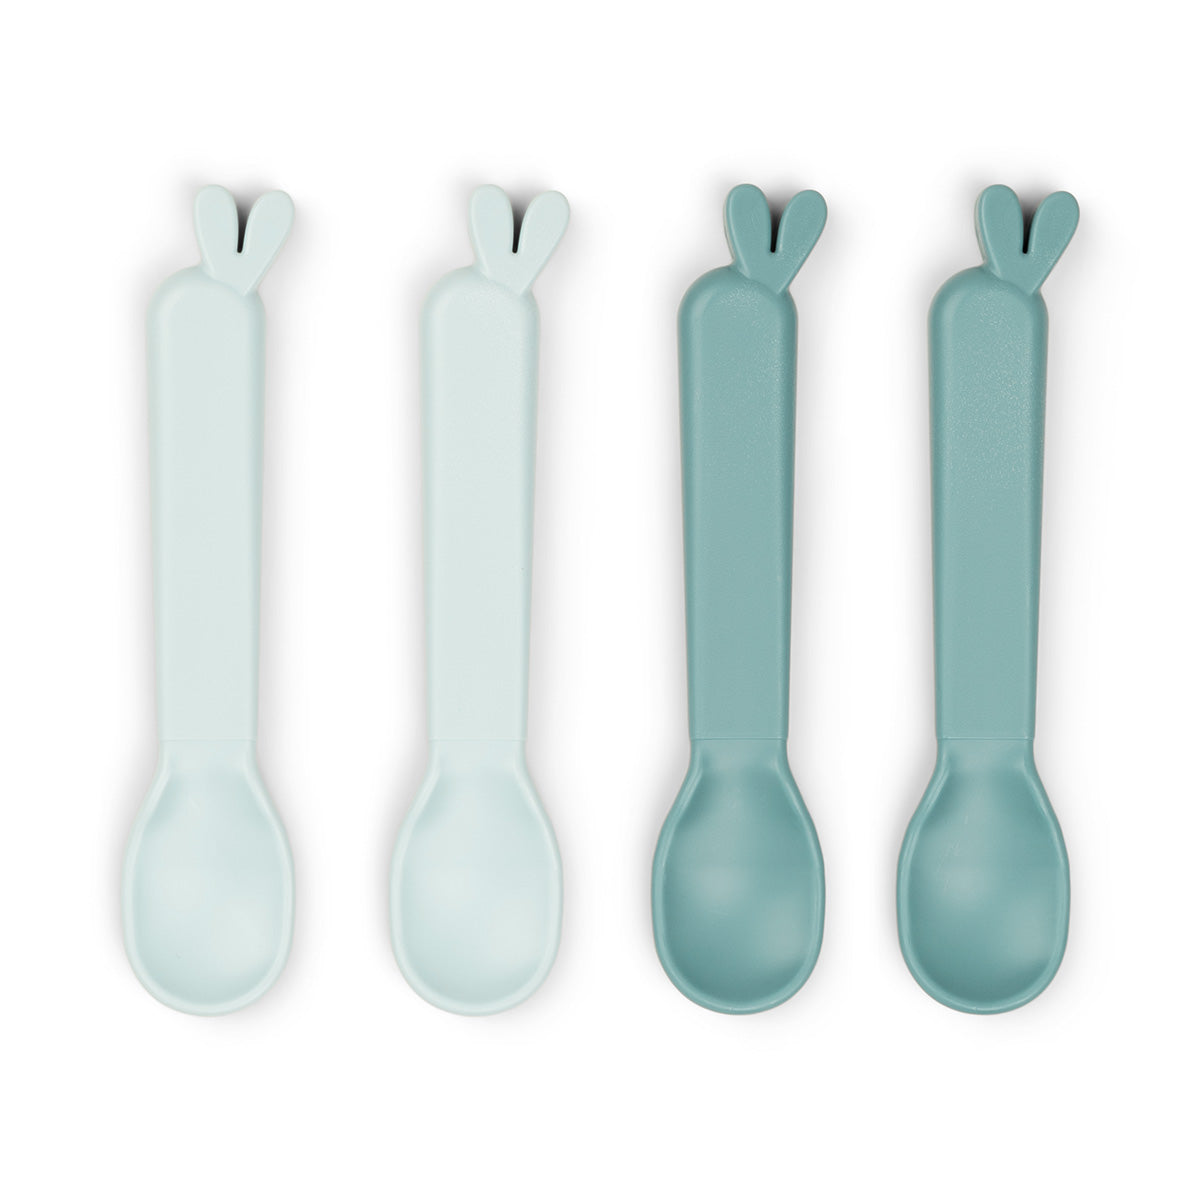 Kiddish spoon 4-pack - Lalee - Blue